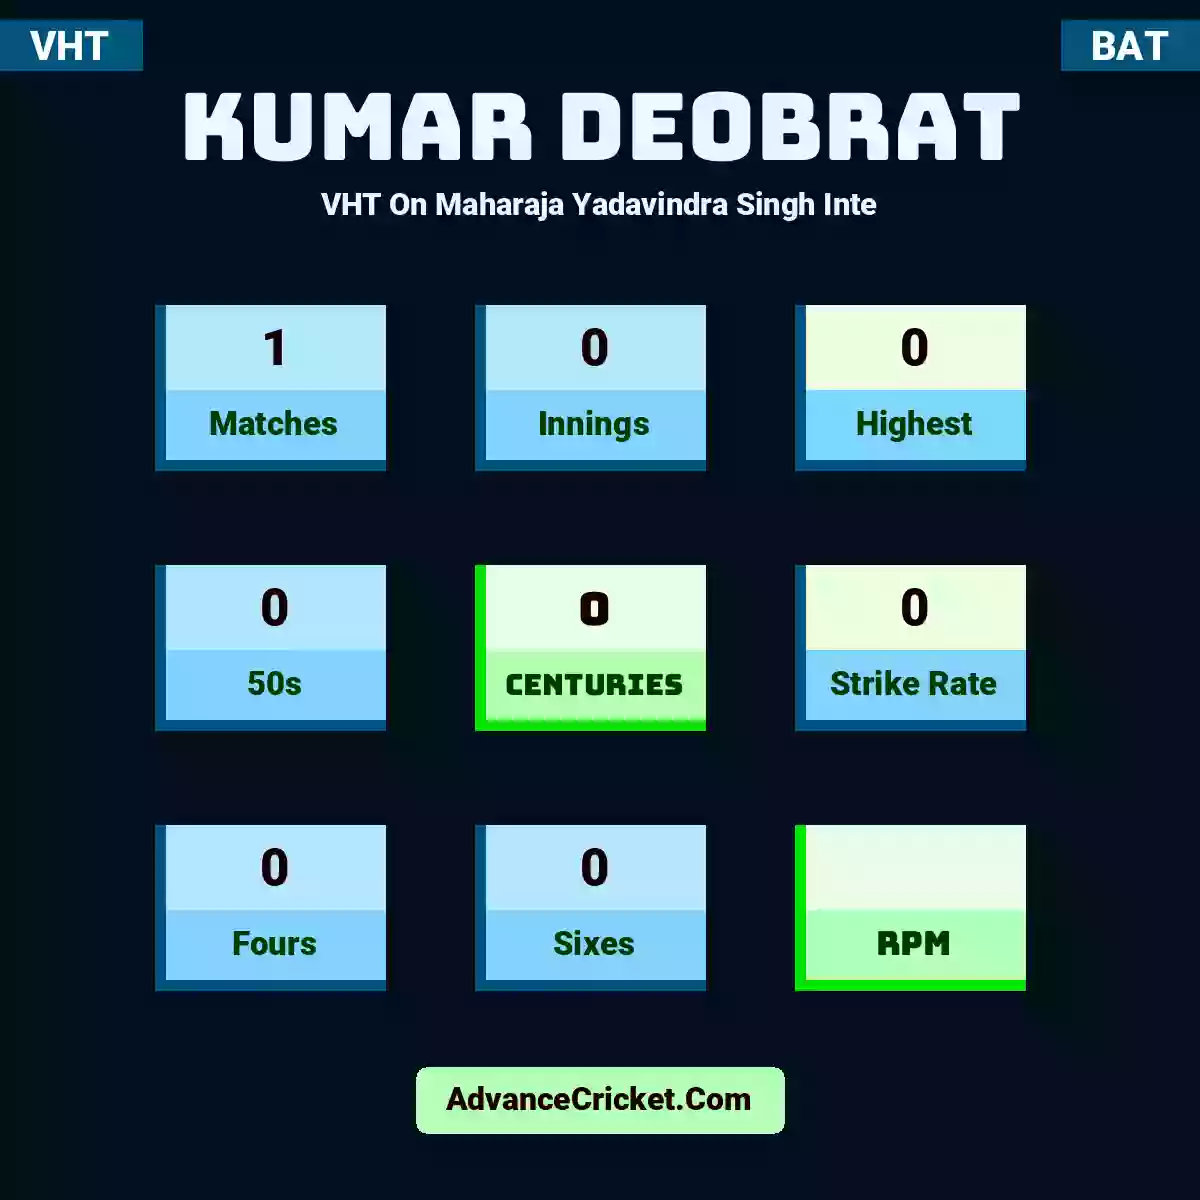 Kumar Deobrat VHT  On Maharaja Yadavindra Singh Inte, Kumar Deobrat played 1 matches, scored 0 runs as highest, 0 half-centuries, and 0 centuries, with a strike rate of 0. K.Deobrat hit 0 fours and 0 sixes.